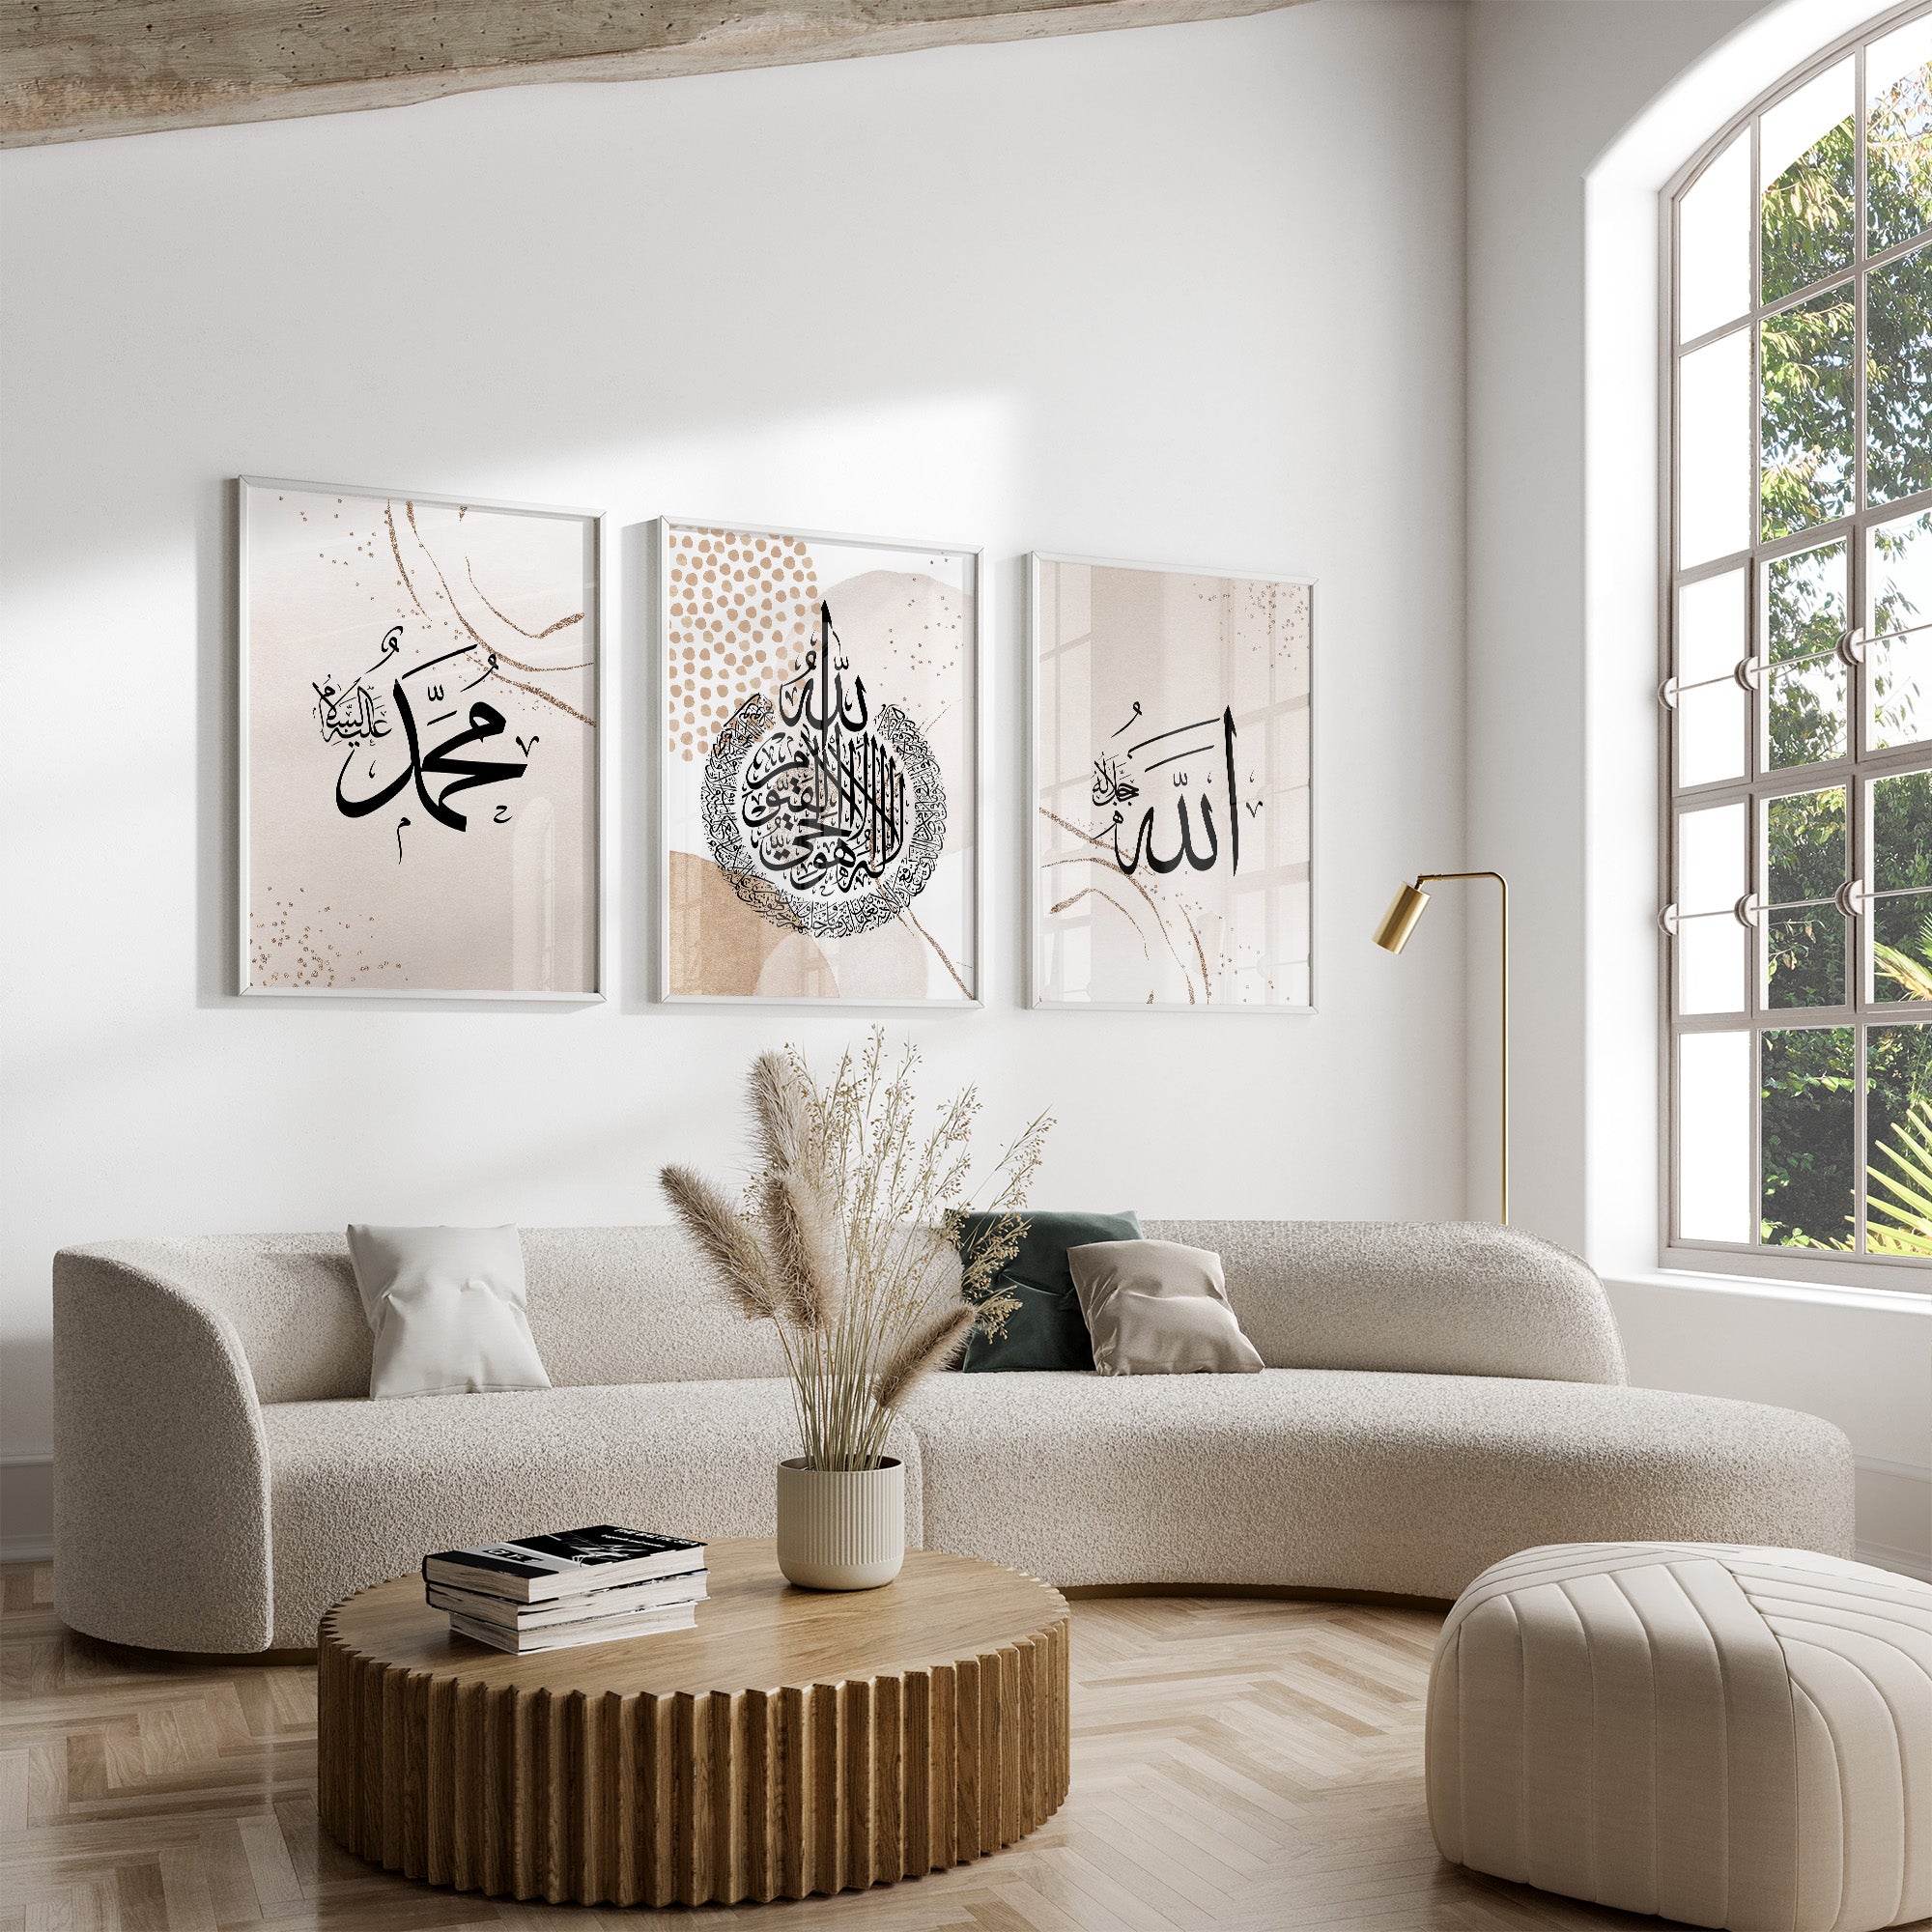 Set of 3 Allah - Ayatul Kursi - Muhammad Abstract Arabic Calligraphy Islamic Wall Art Print